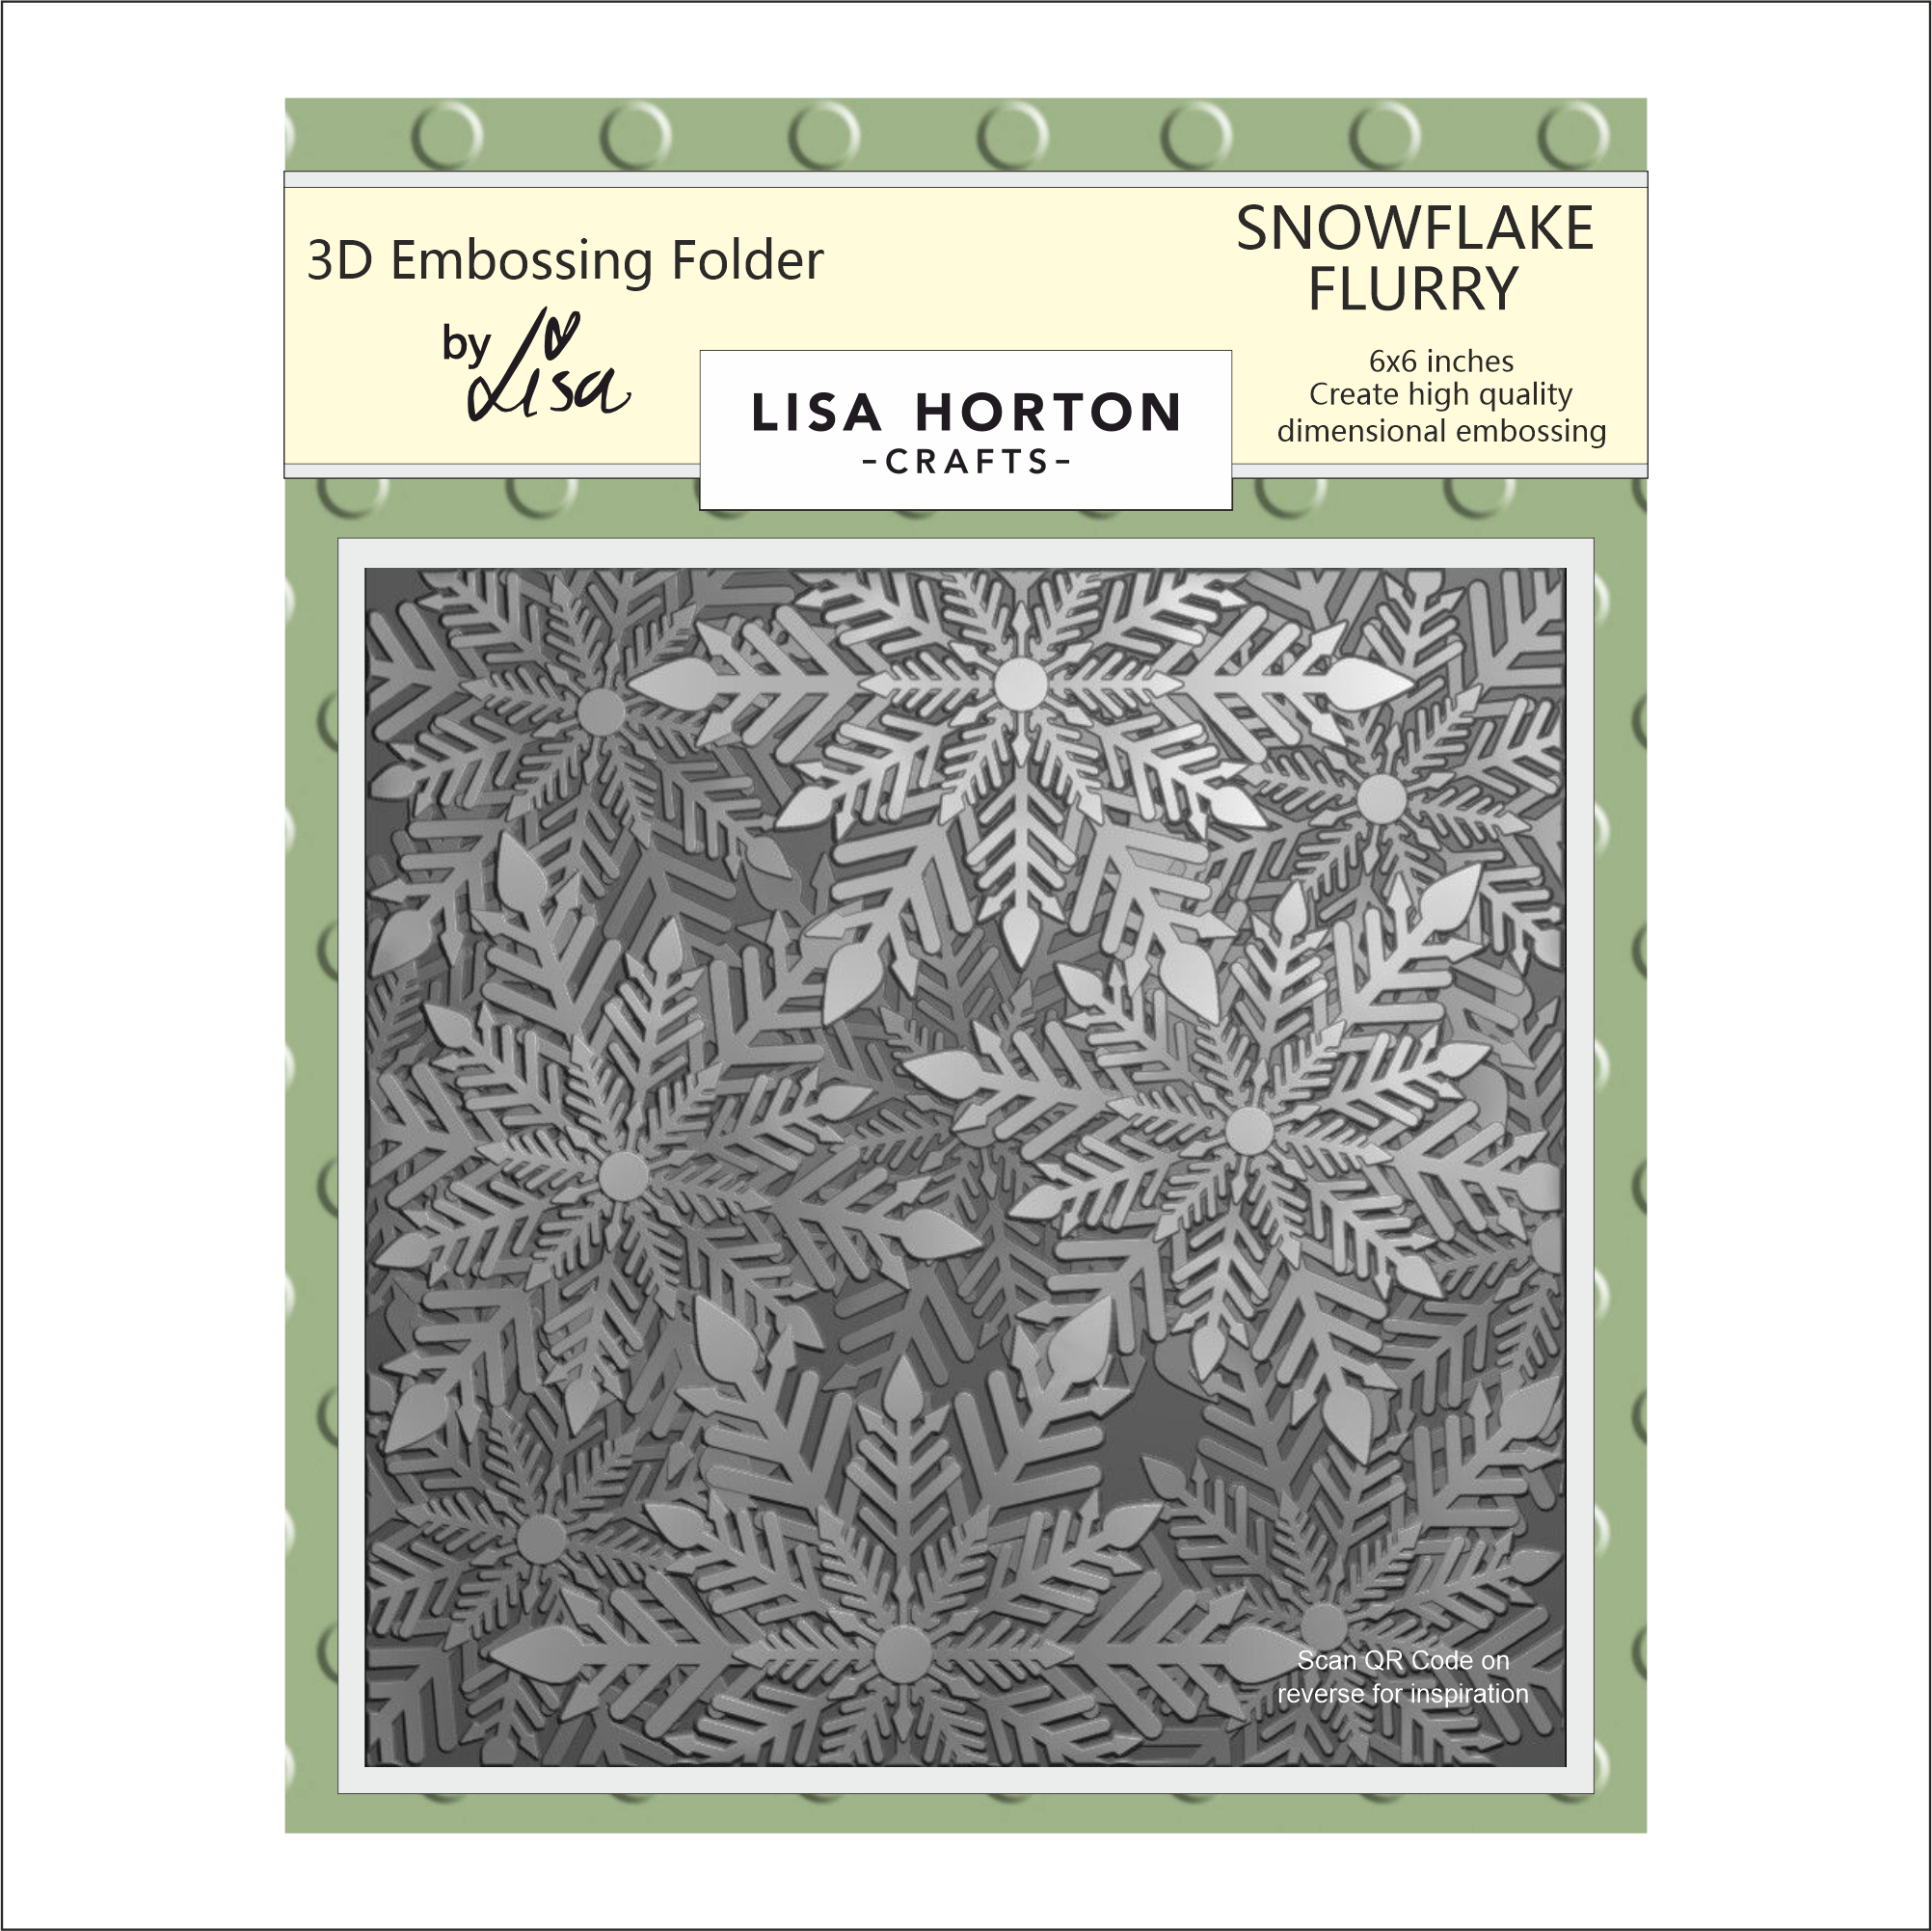 Lisa Horton Crafts Snowflake Flurry 6x6 3D Embossing Folder